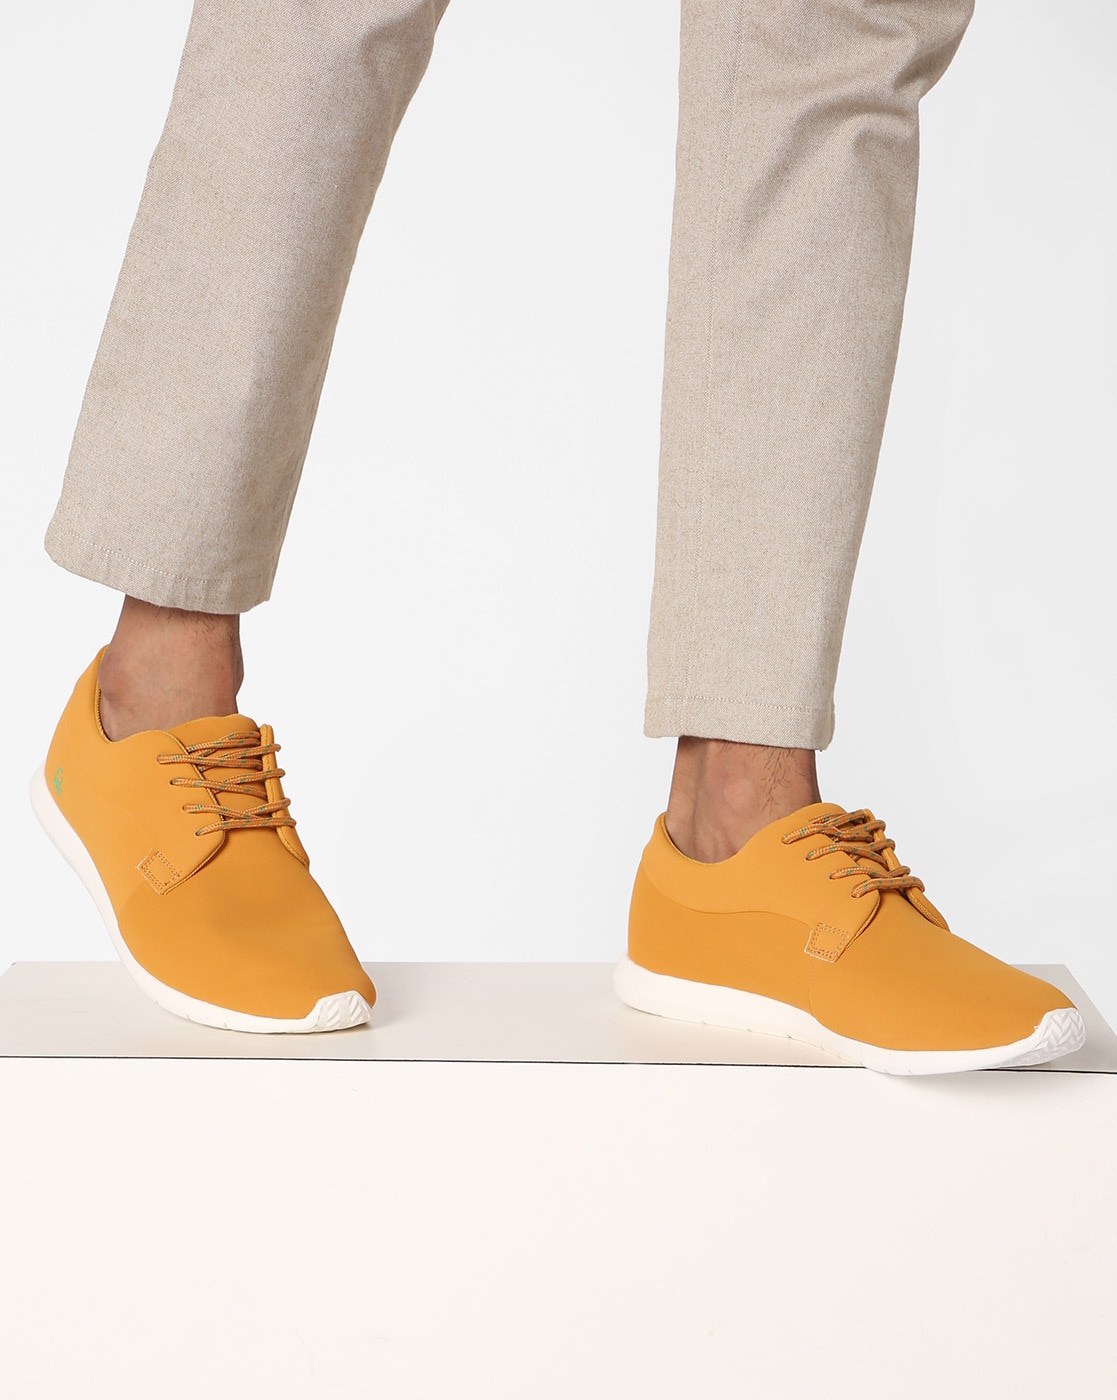 benetton yellow shoes